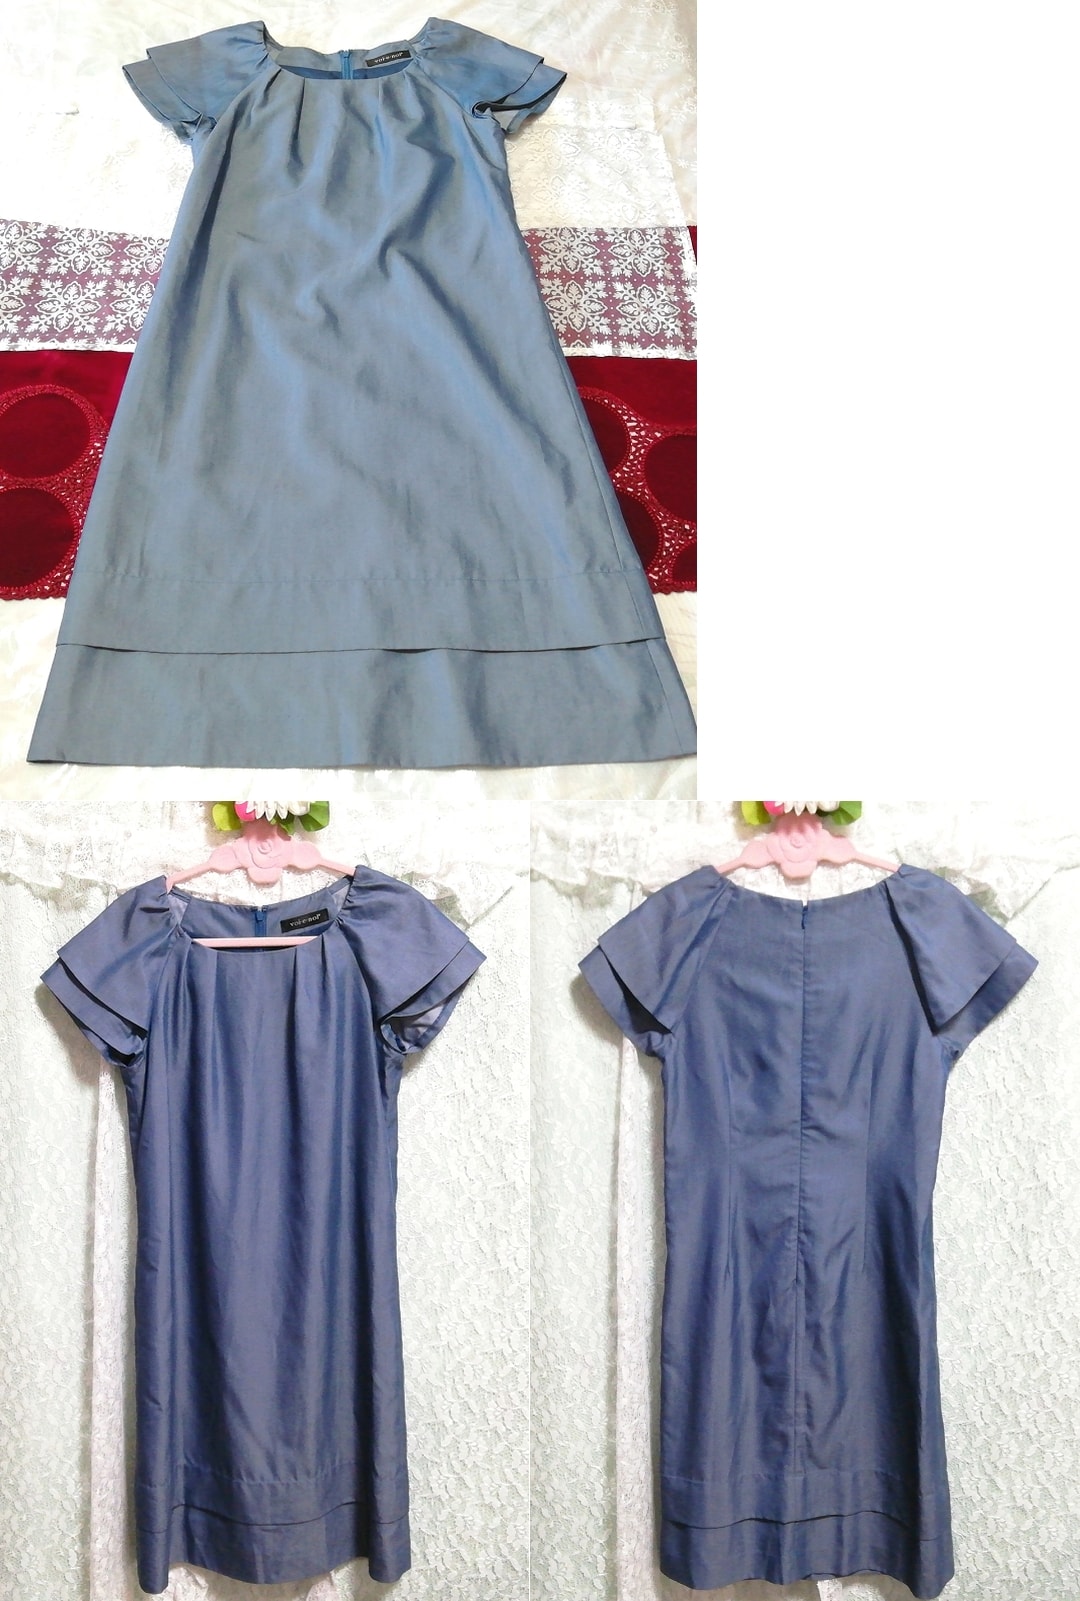 Denim style short sleeve long tunic negligee nightgown nightwear dress, tunic, short sleeve, m size